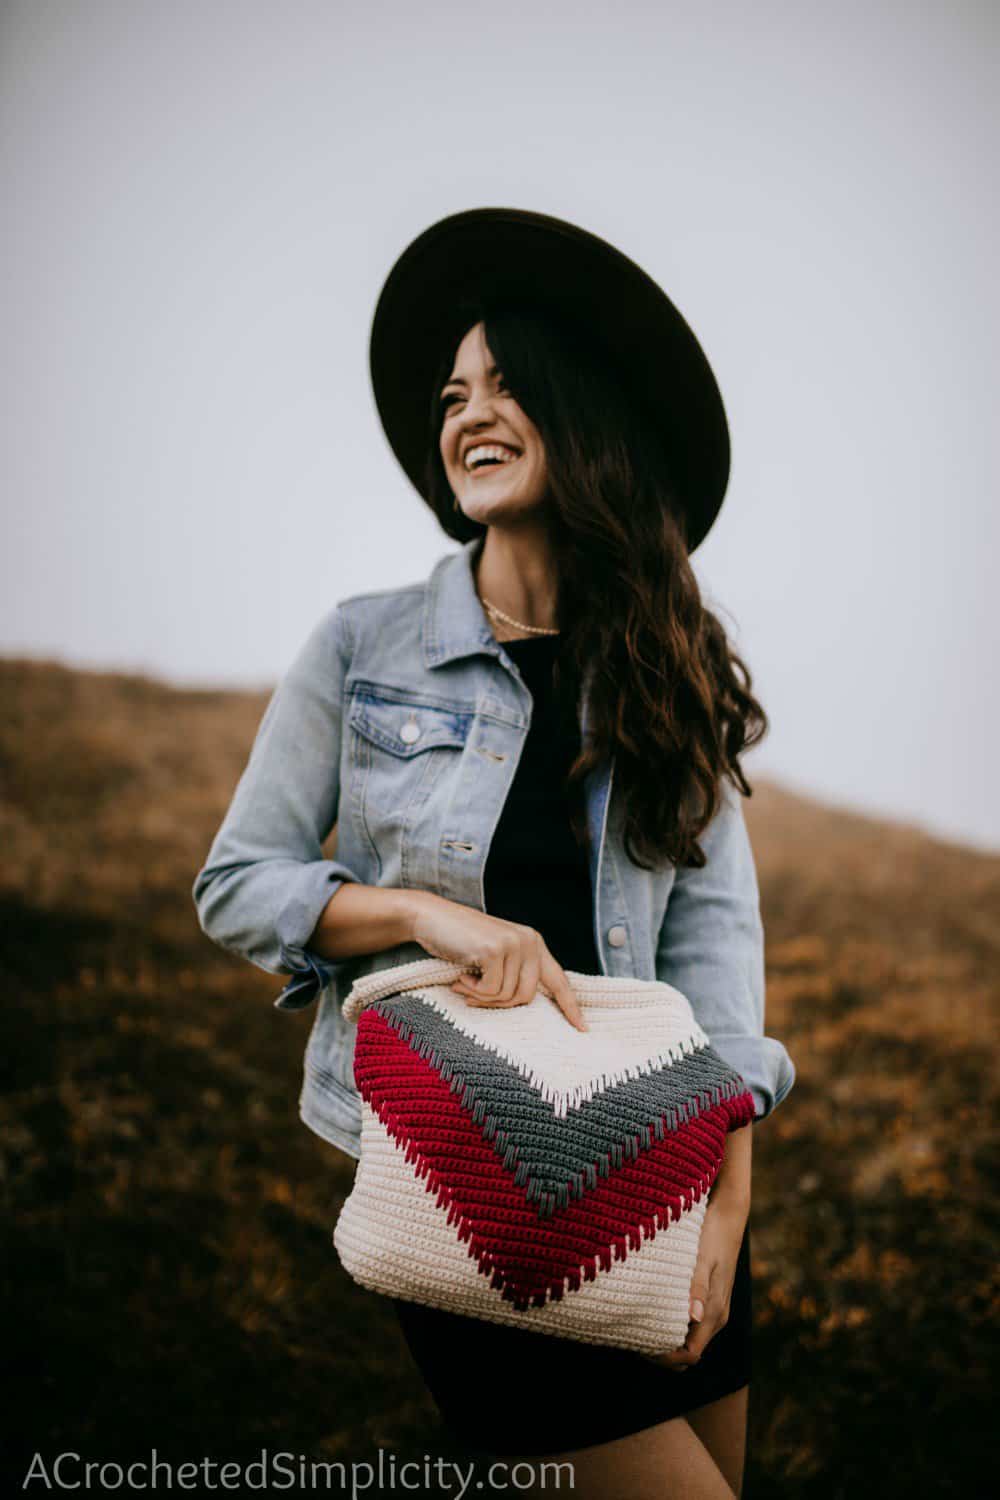 Wanderlust Crochet Backpack - Free Crochet Backpack Pattern by A Crocheted Simplicity #crochetbag #crochetbackpack #crochetchevron #chevronbackpack #handmadebackpack #freecrochetpattern #crochetbackpackpattern #chevron #spikestitch #crochetspikestitch